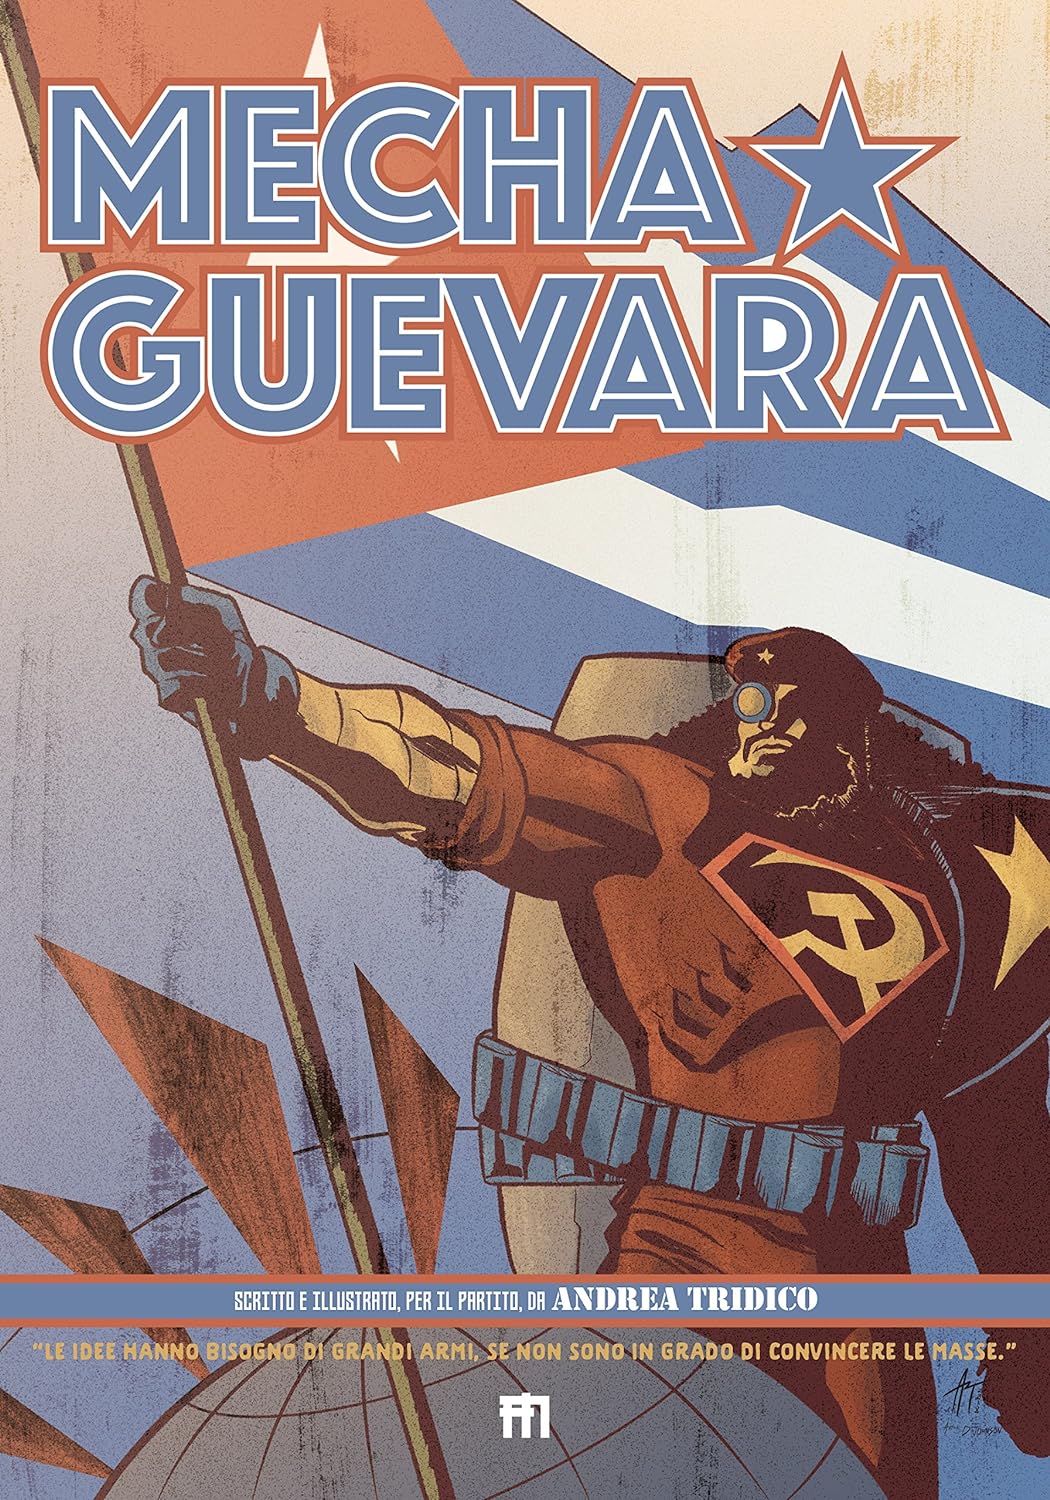 Mecha Guevara (Italiano language, ManFont)